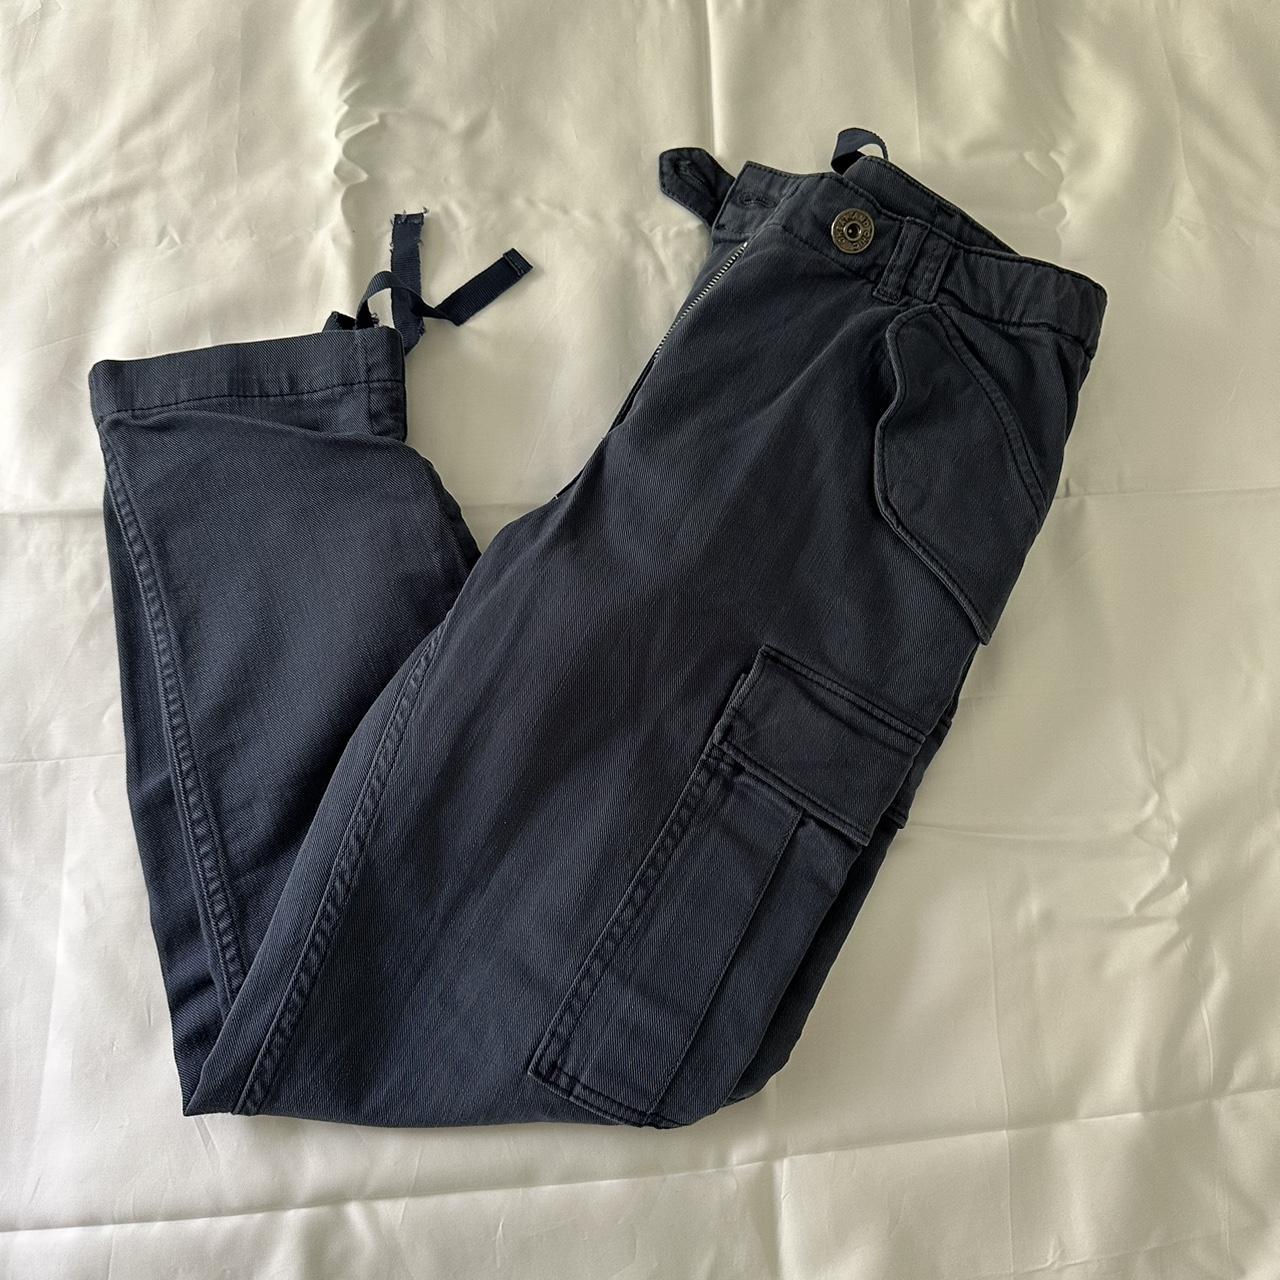 Moschino Cheap & Chic Women's Navy Trousers